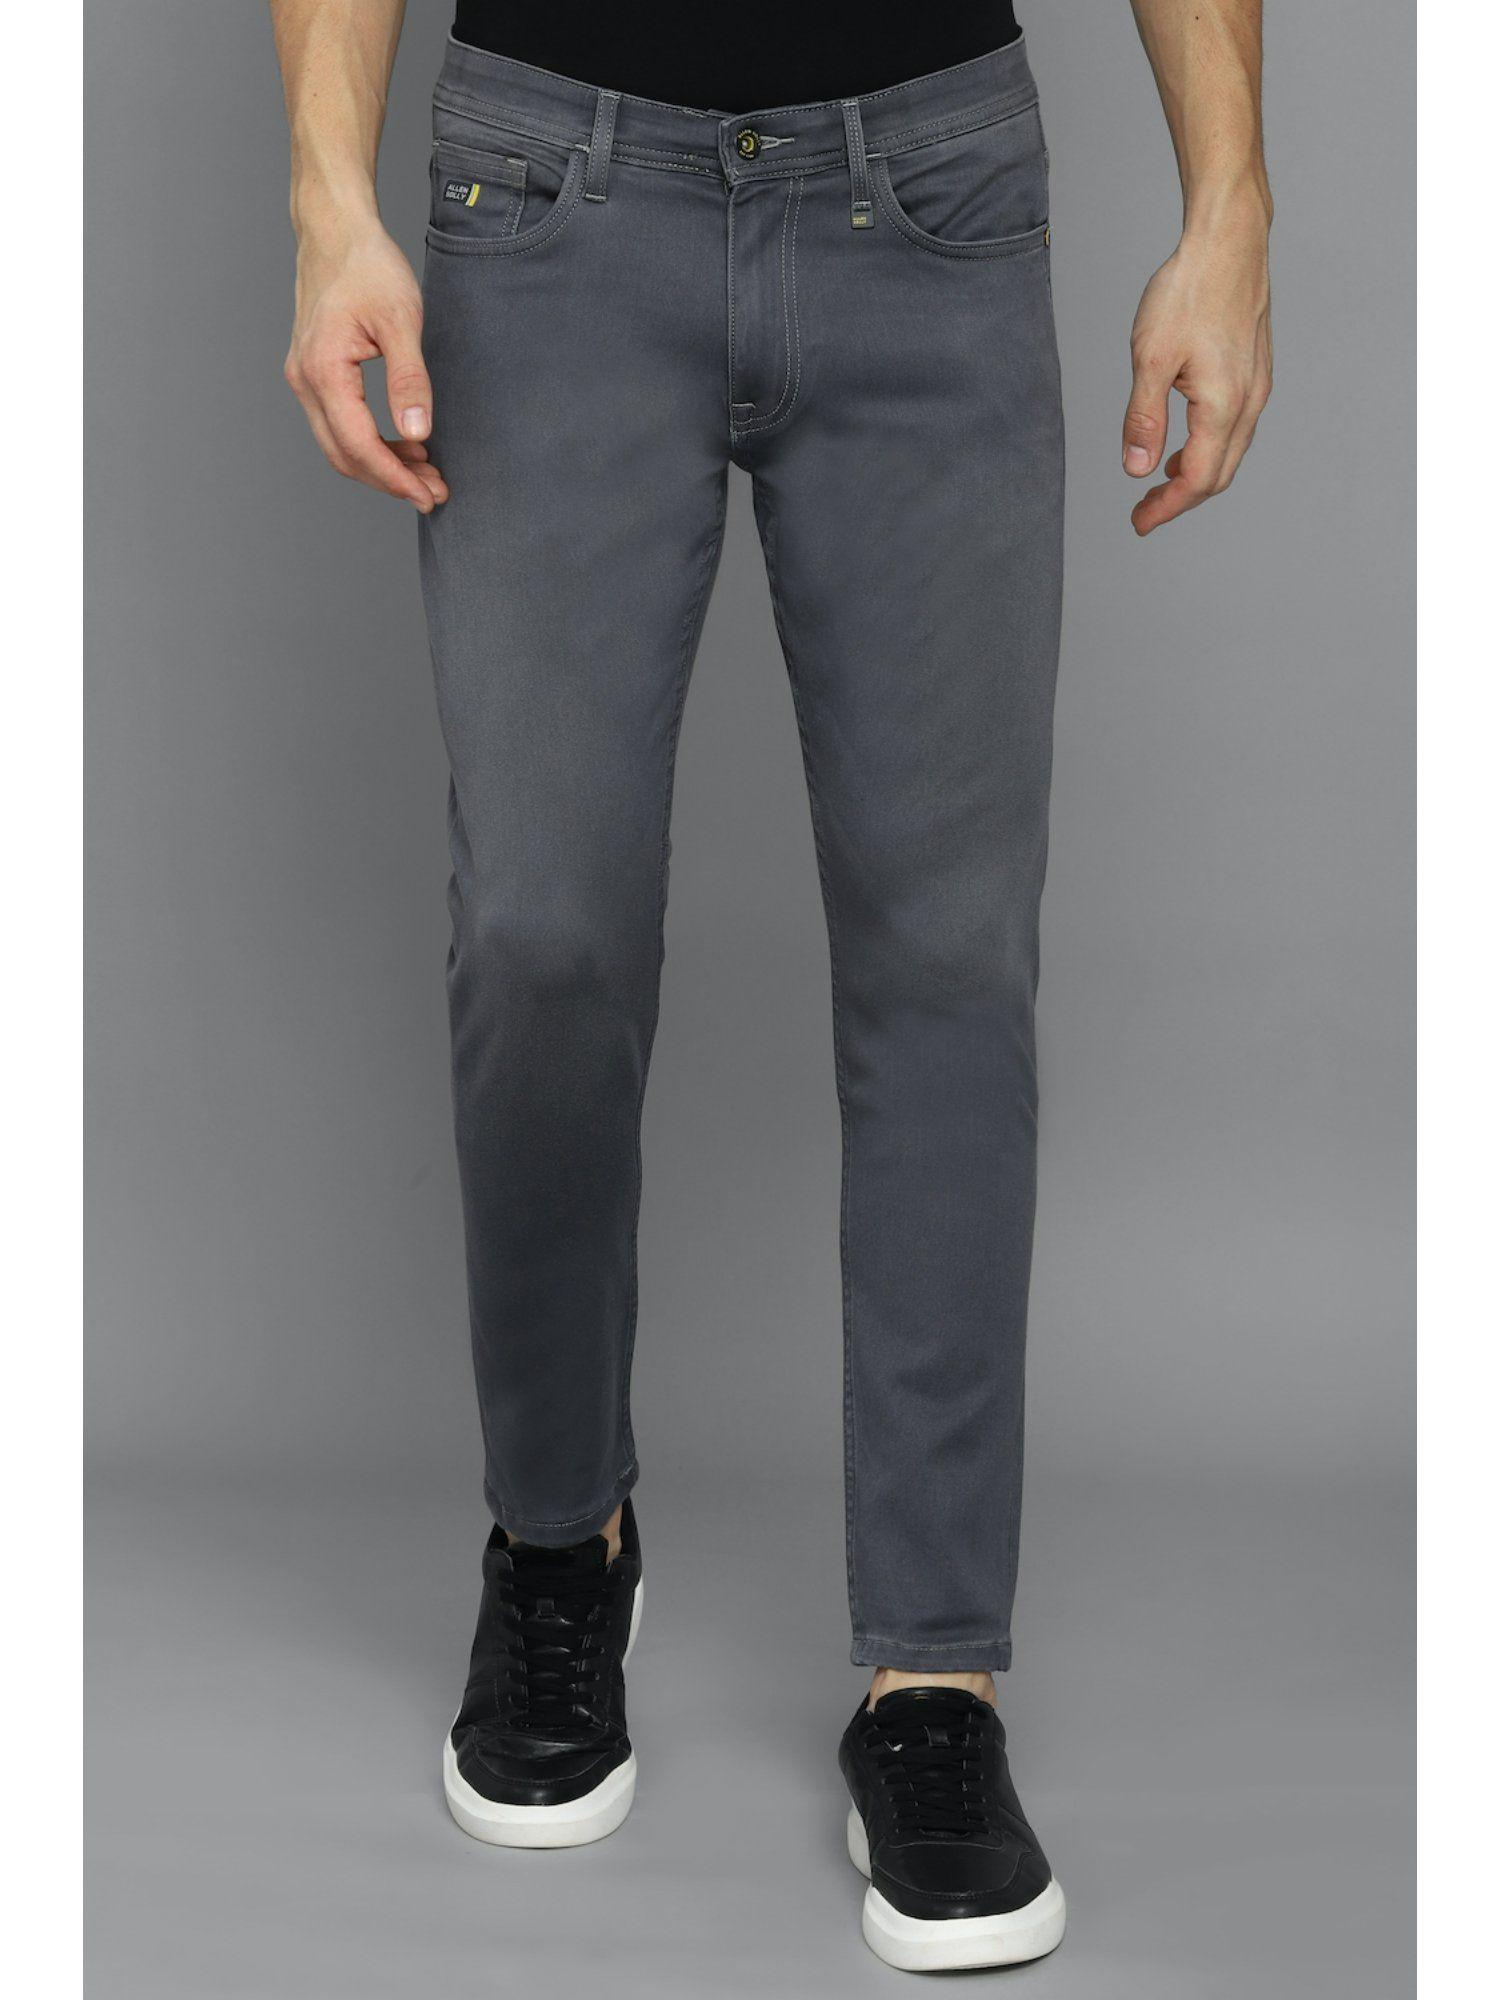 Grey Jeans